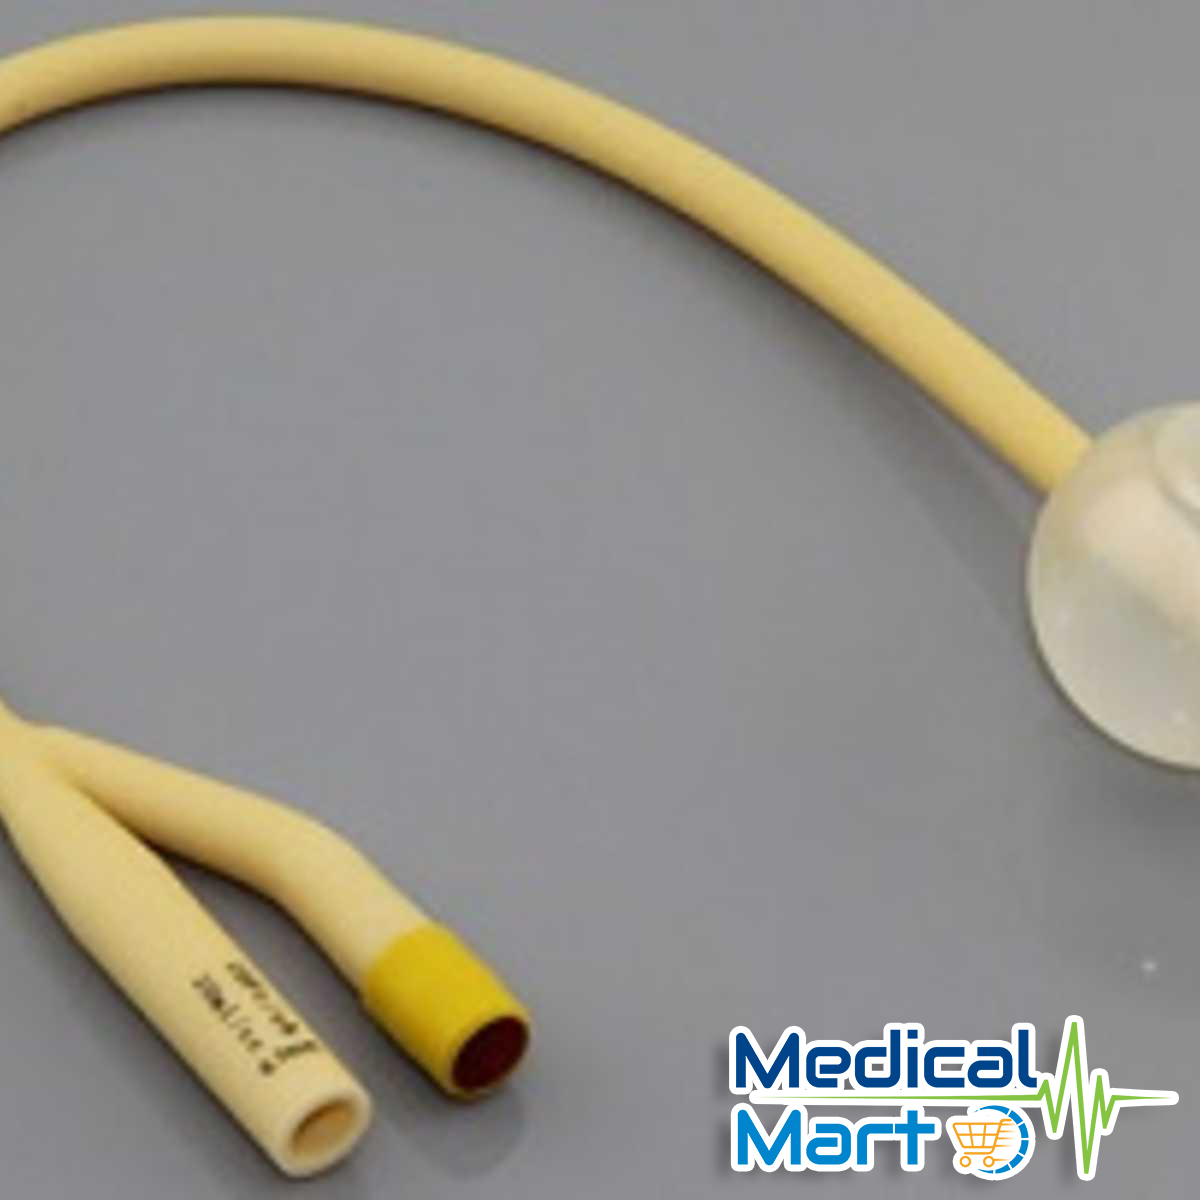 2-Way Balloon Foley Catheter, Yellow, 10fr